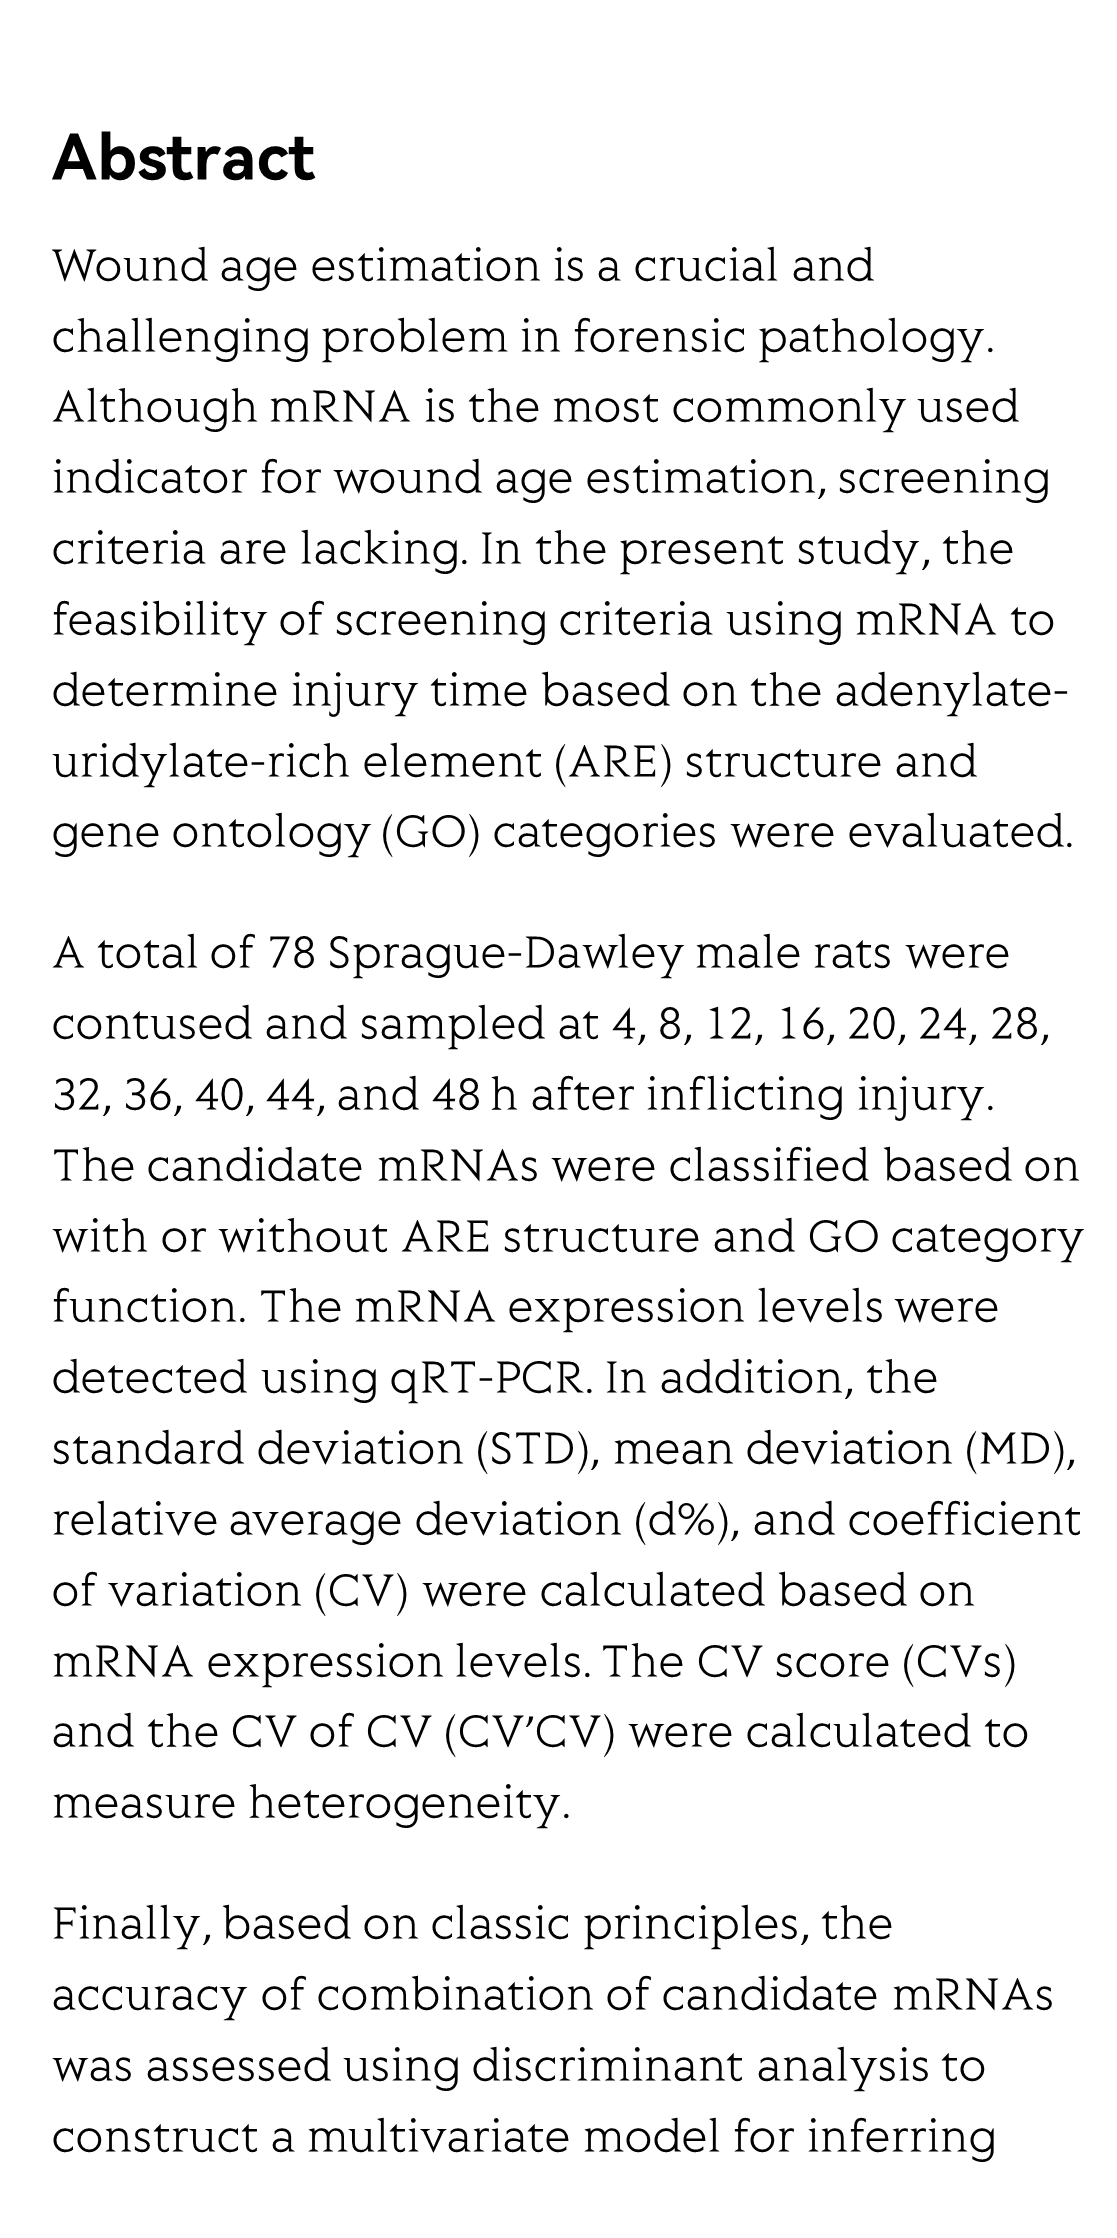 Screening criteria of mRNA indicators for wound age estimation_2